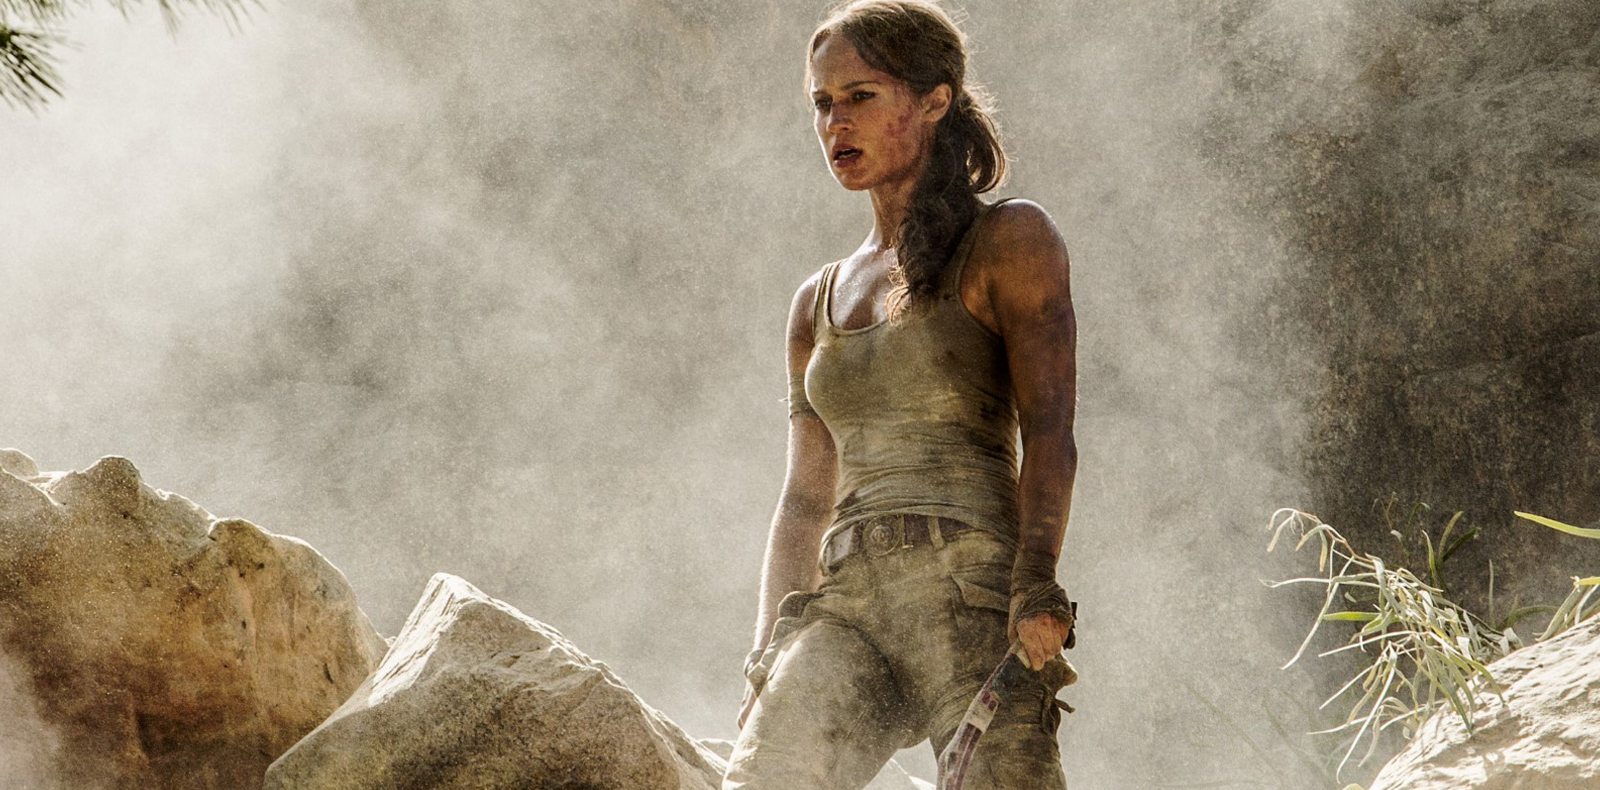 Alicia Vikander in “Tomb Raider” (2017) by Roar Uthaugh, © 2017 WARNER BROS. ENTERTAINMENT INC. AND METRO-GOLDWYN-MAYER PICTURES INC. / Ilze Kitshoff